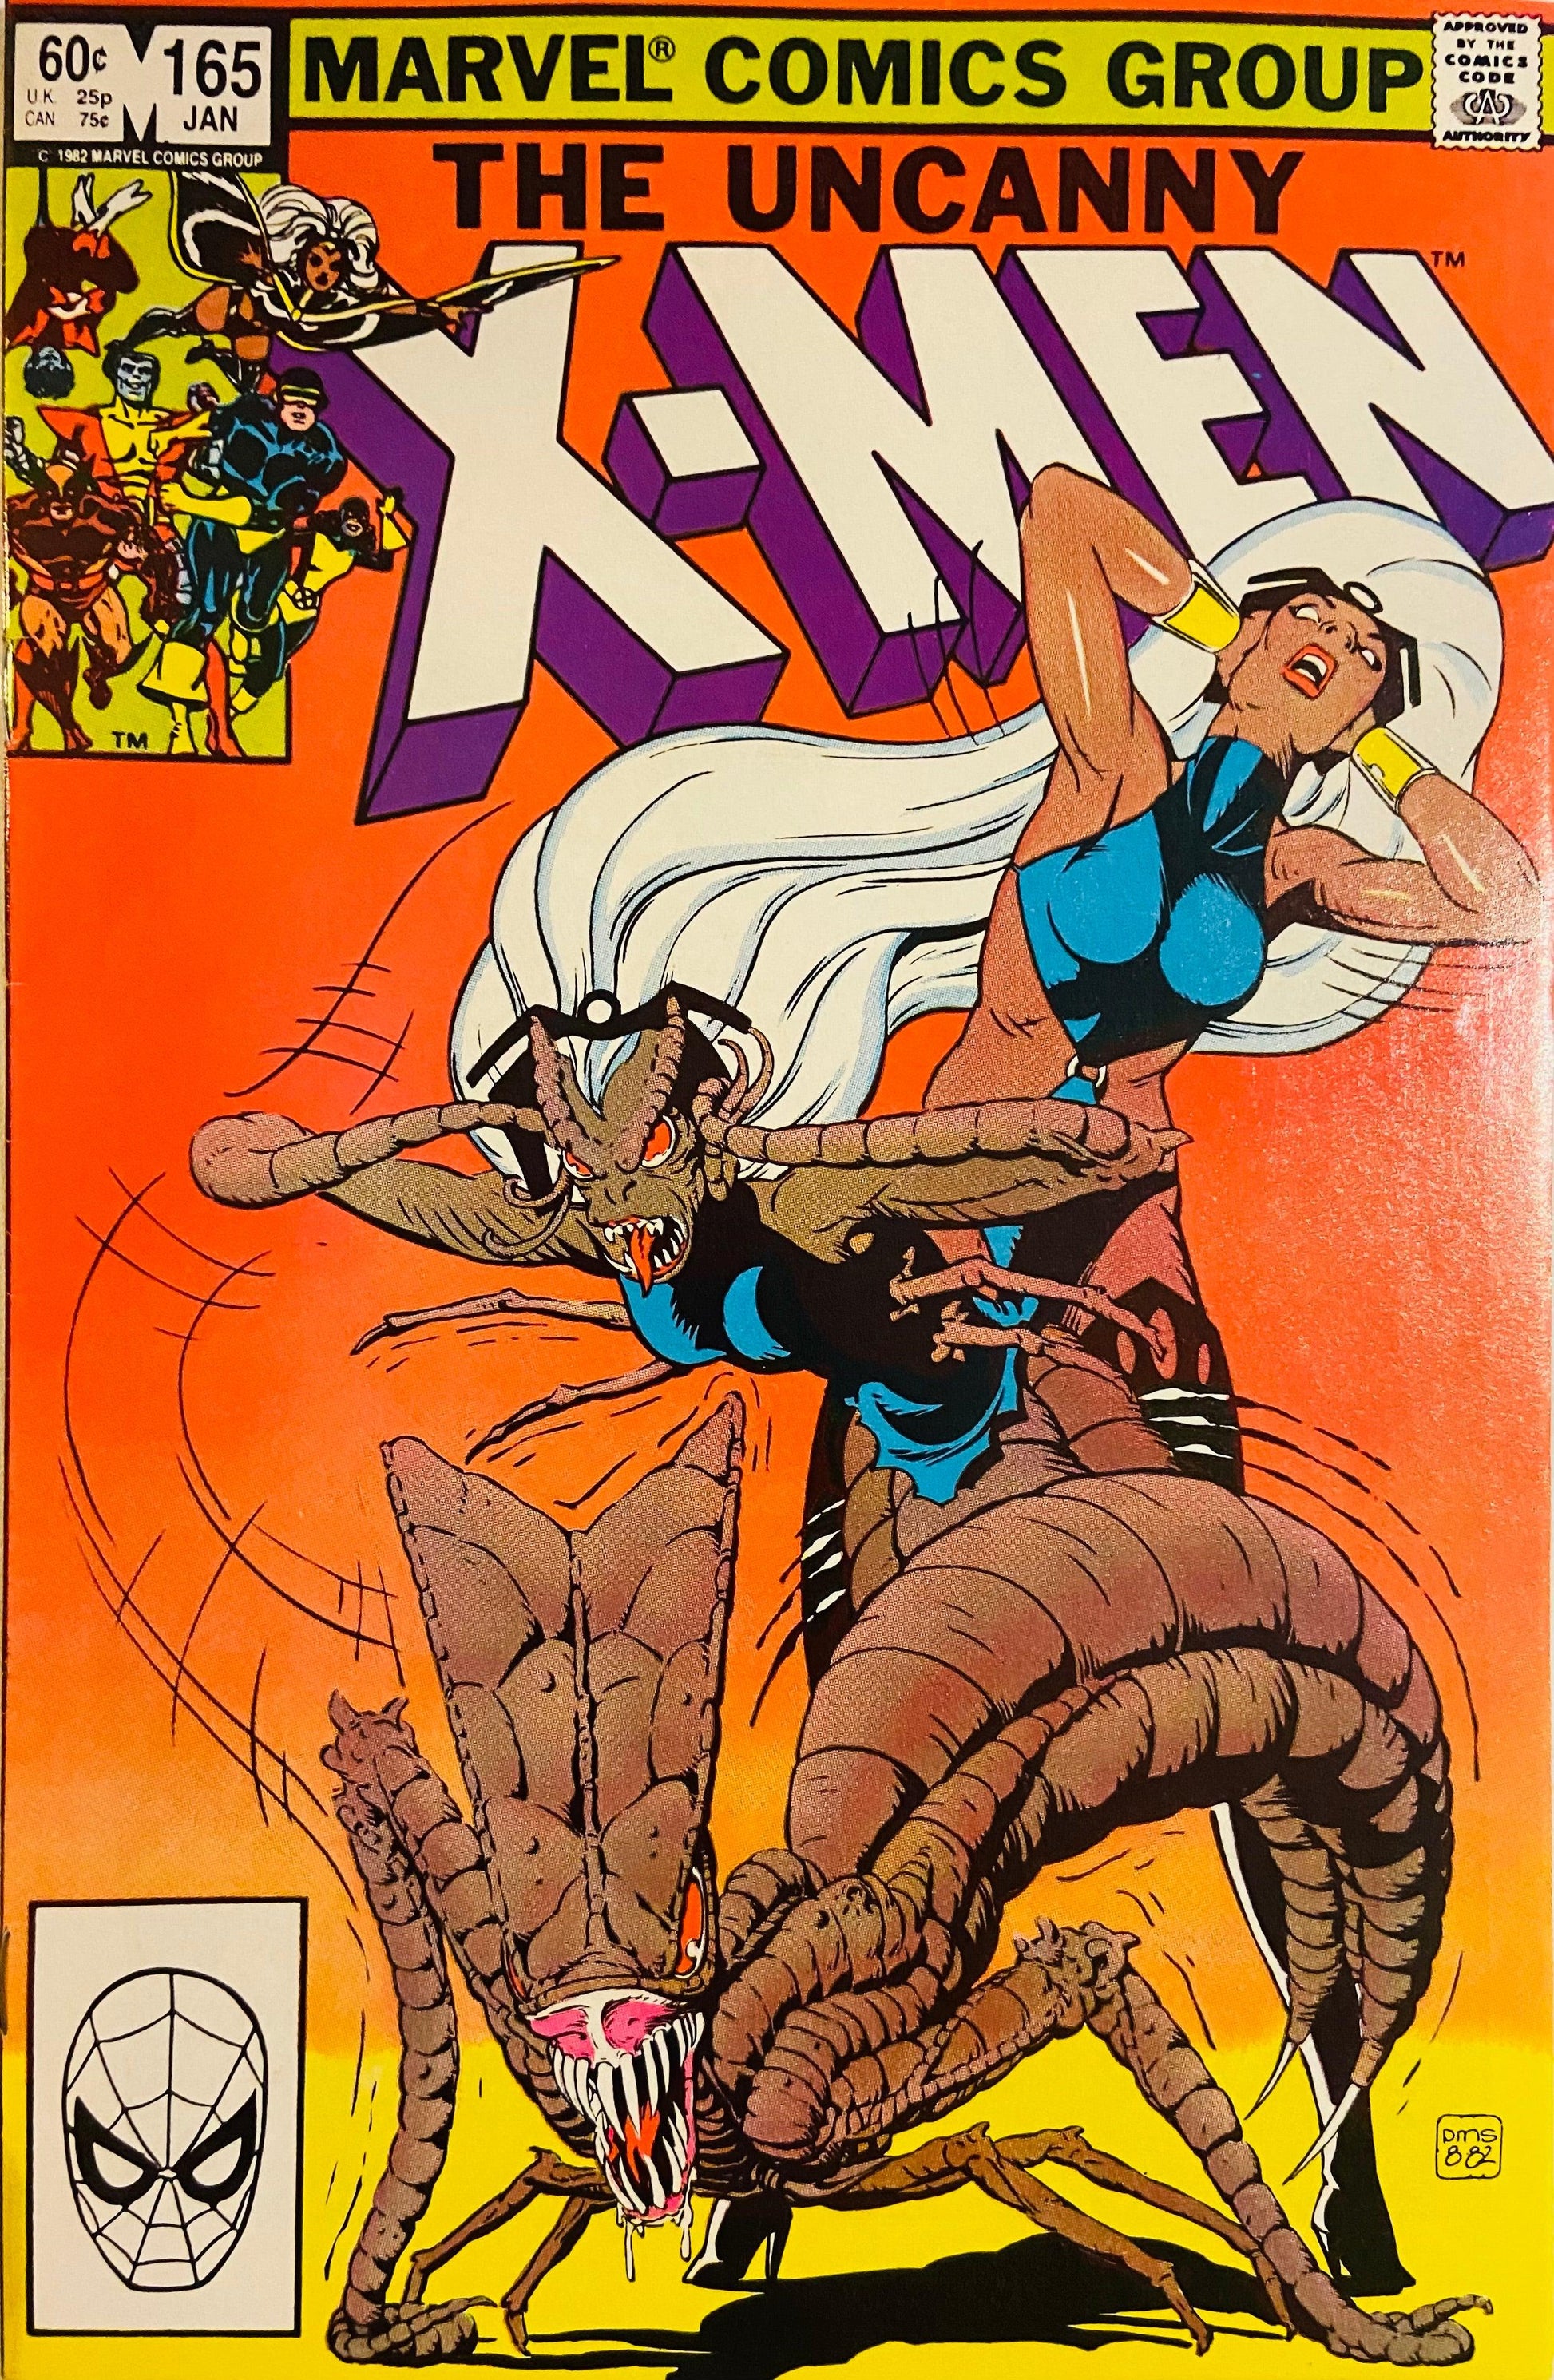 Uncanny X-men #165 - HolyGrail Comix